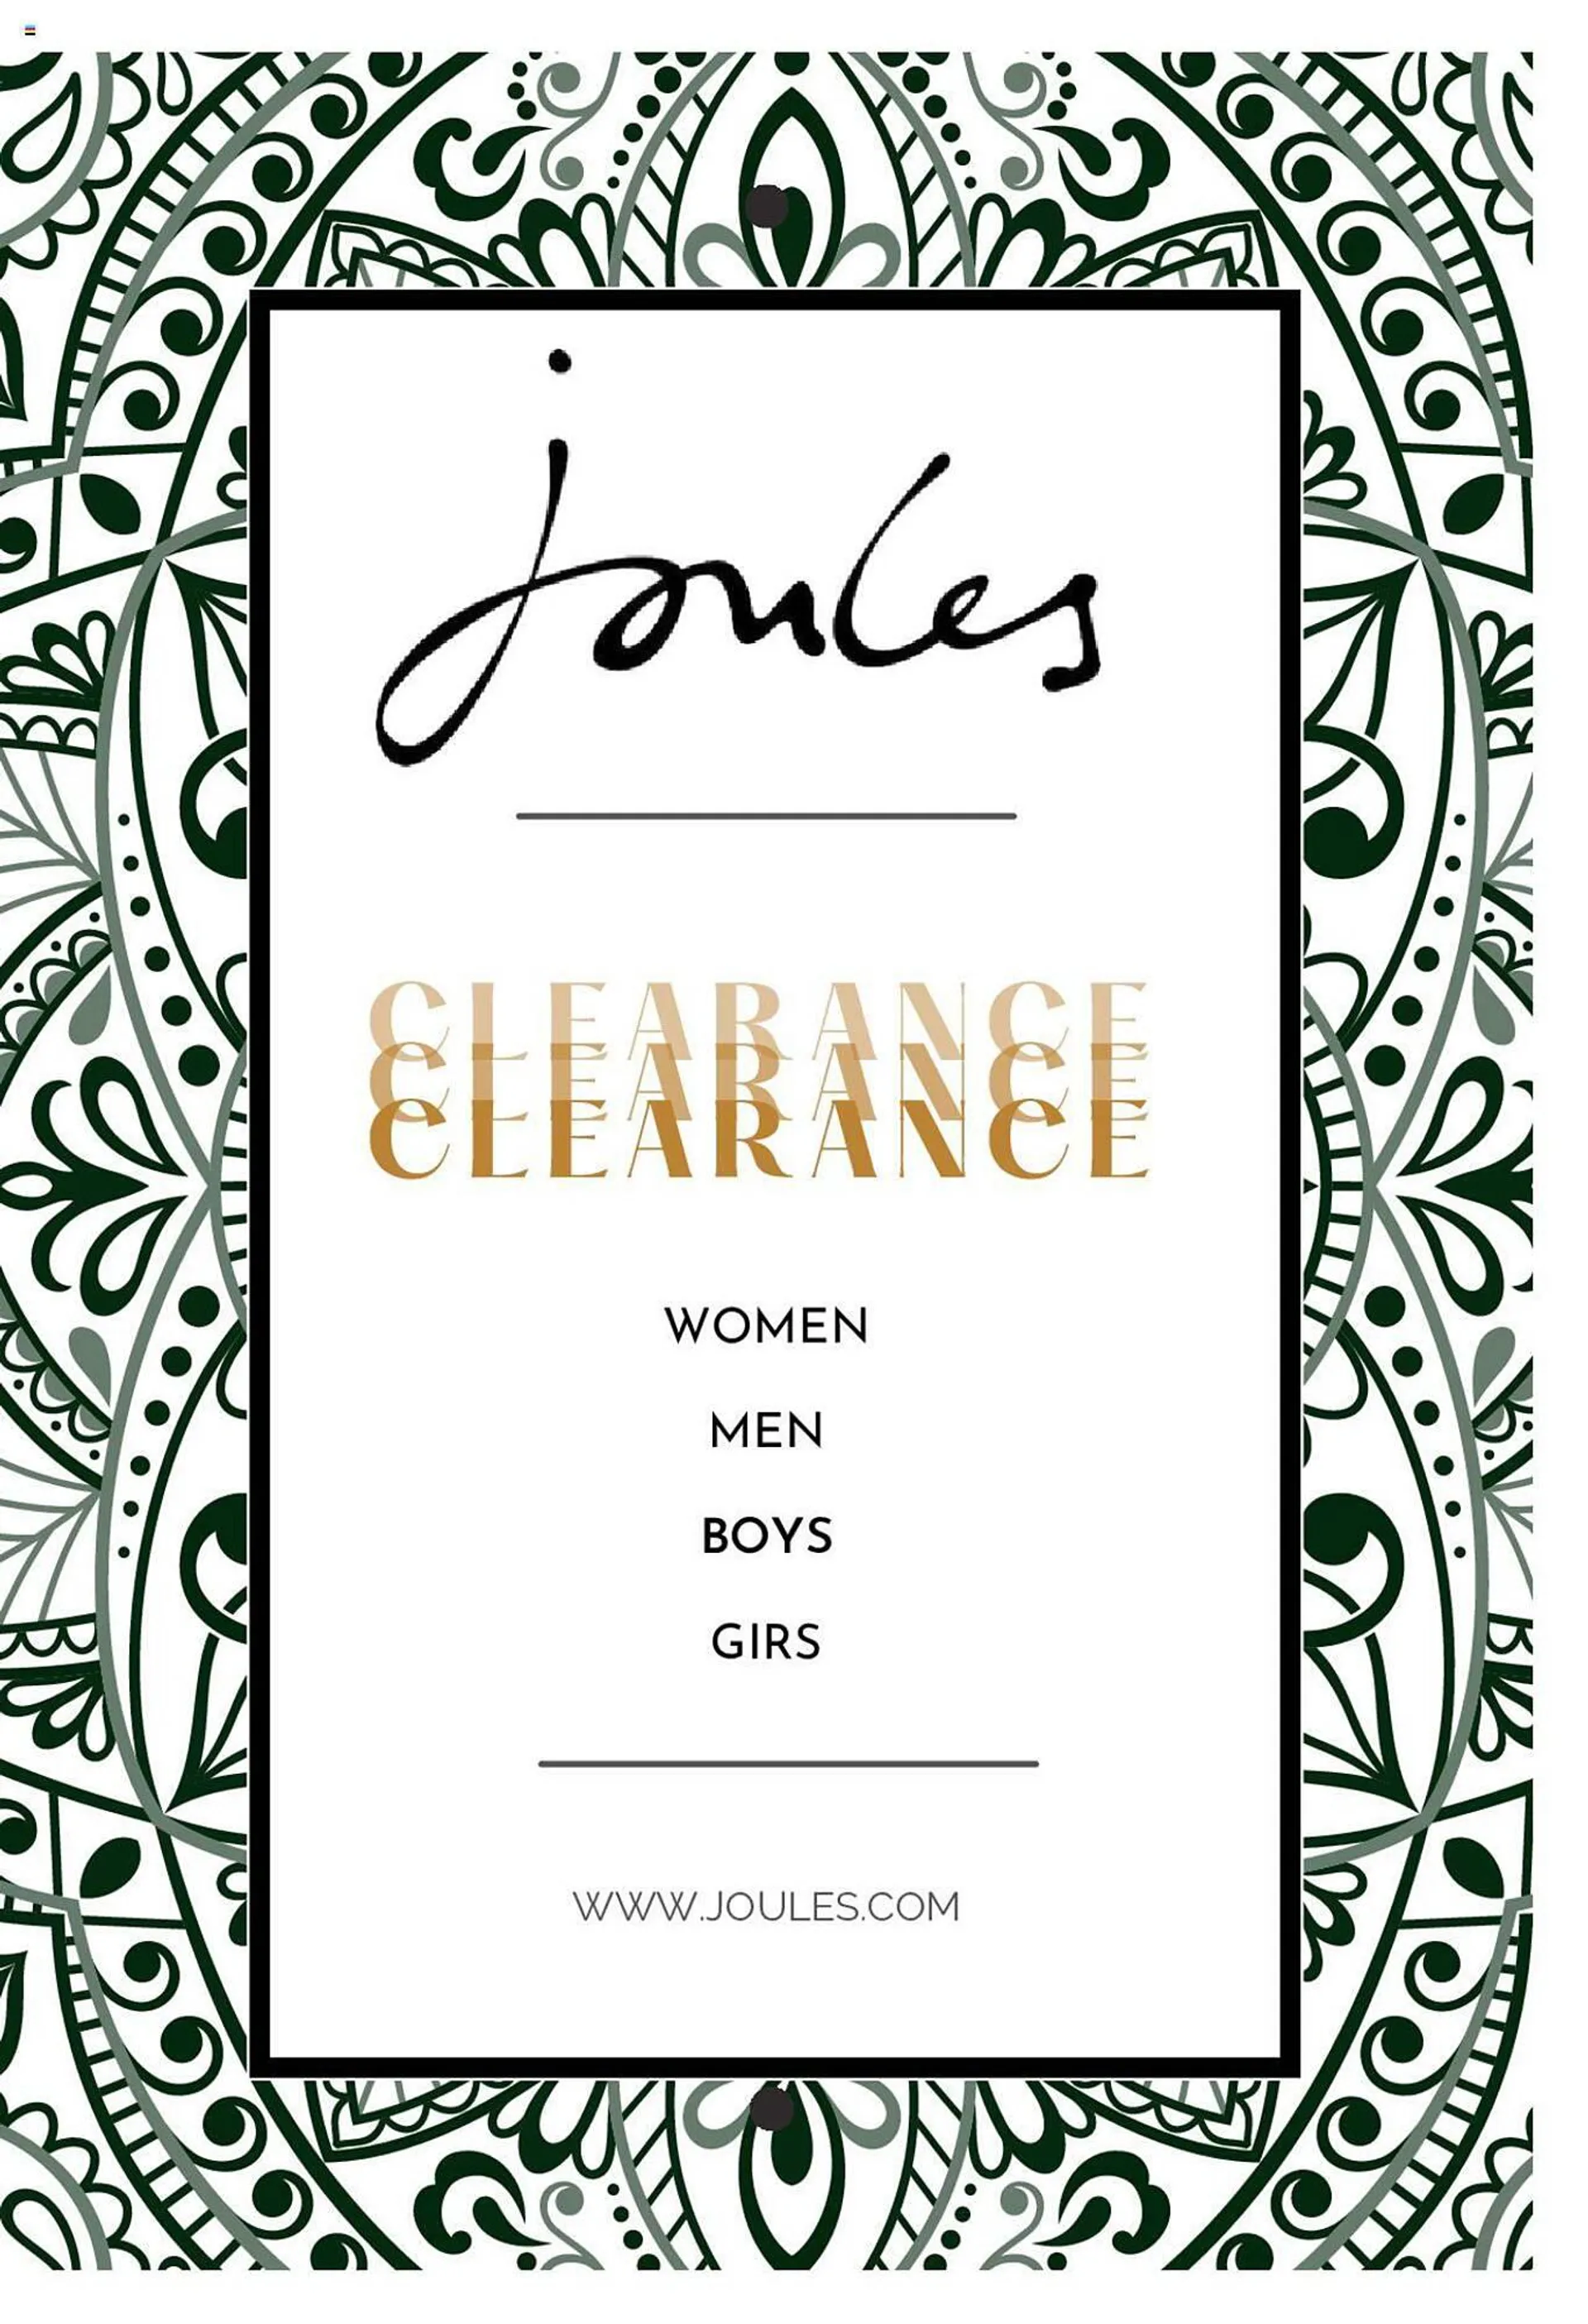 Joules leaflet - 1